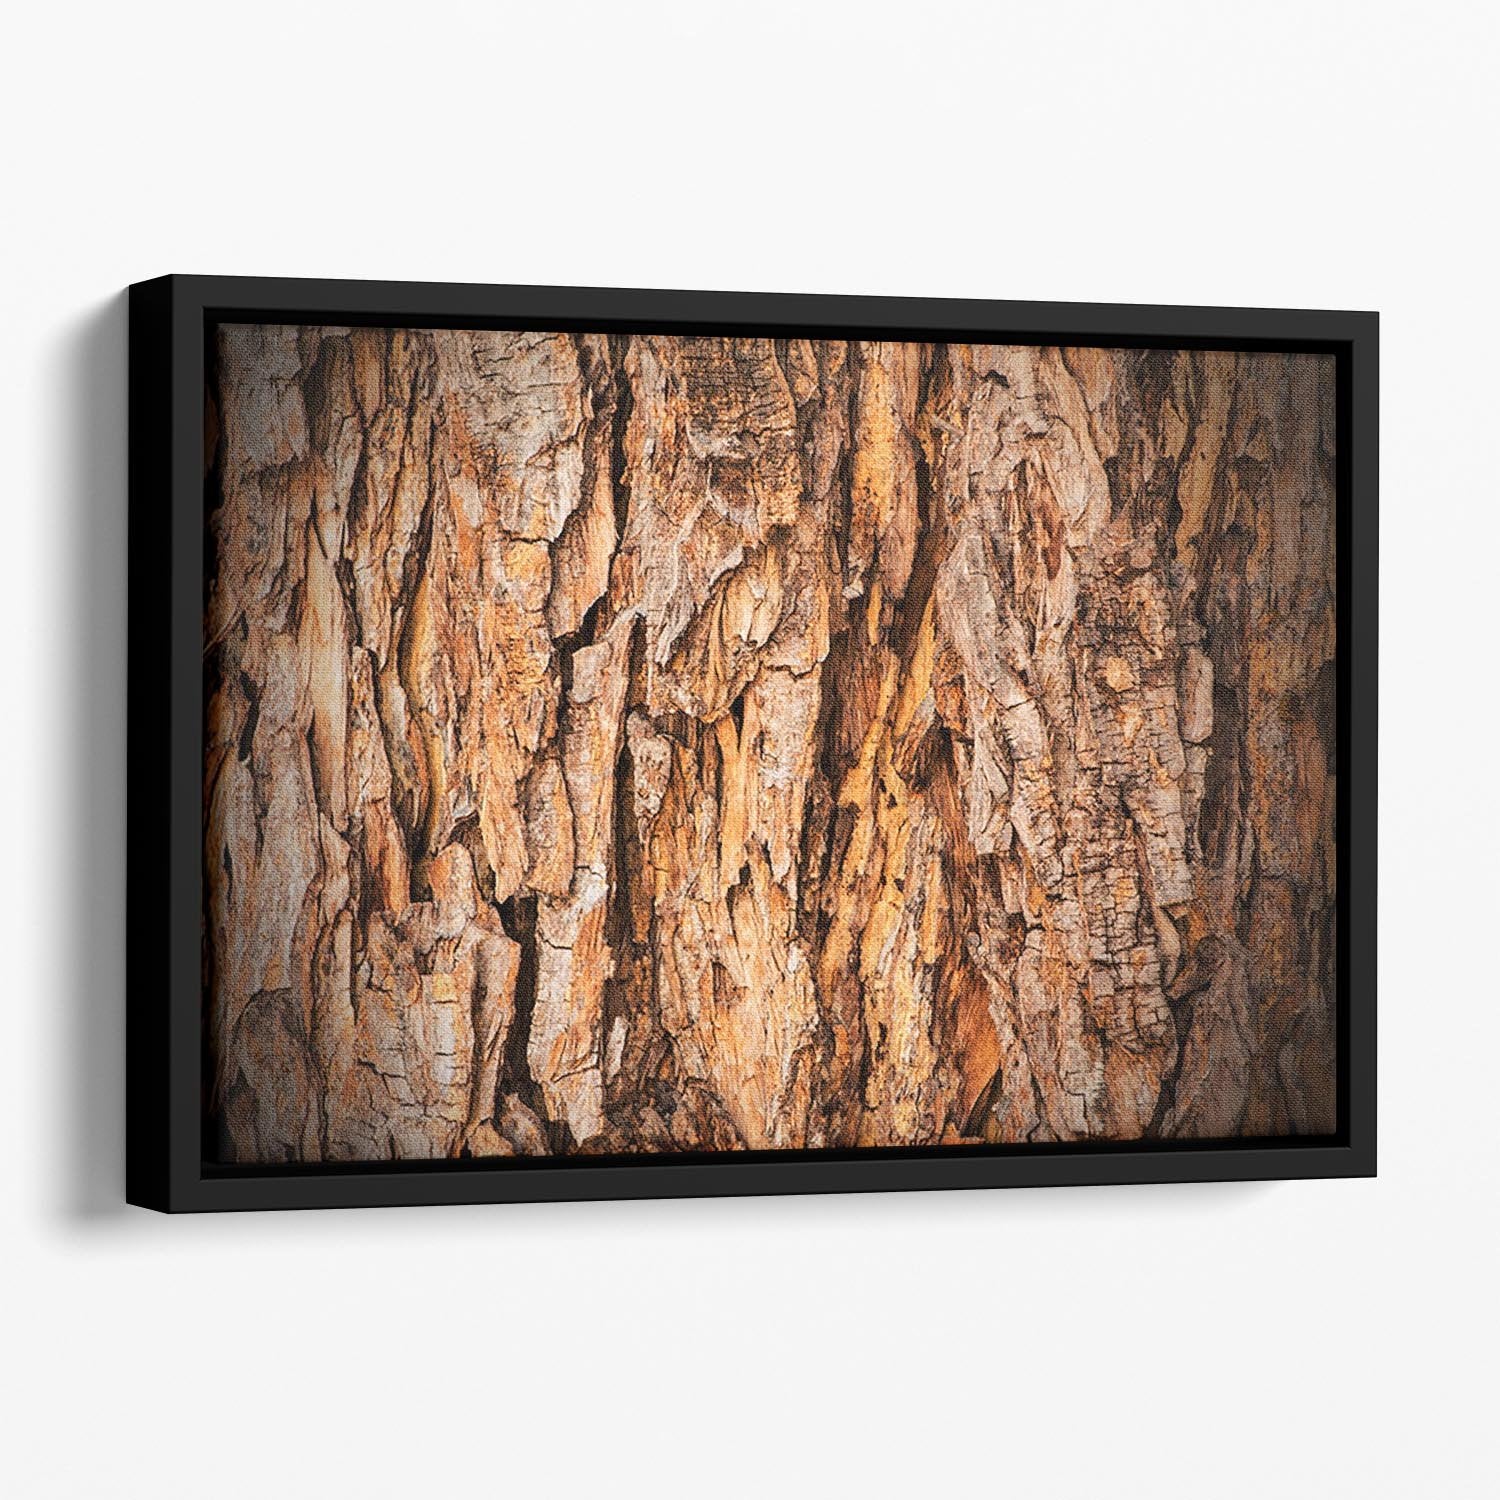 Bark texture Floating Framed Canvas - Canvas Art Rocks - 1